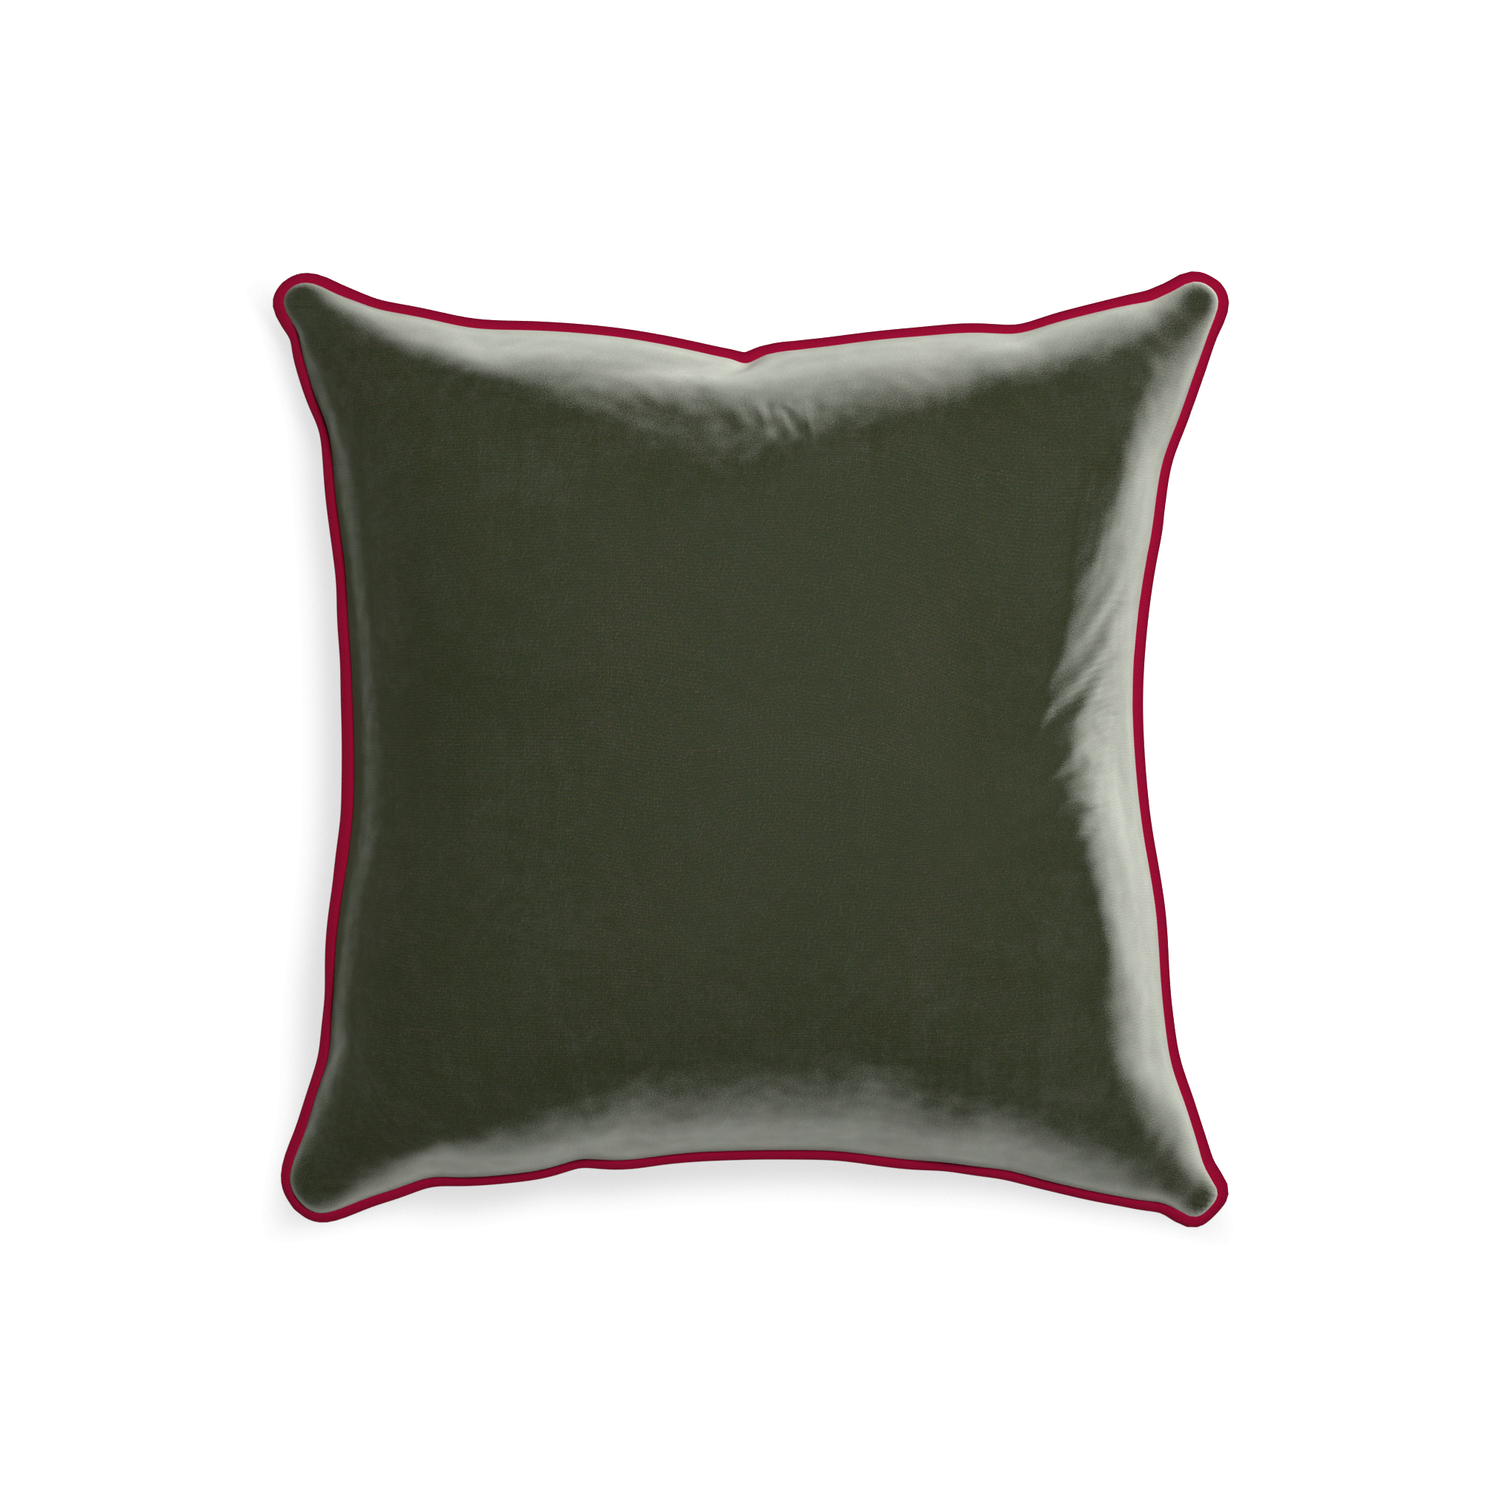 20-square fern velvet custom pillow with raspberry piping on white background